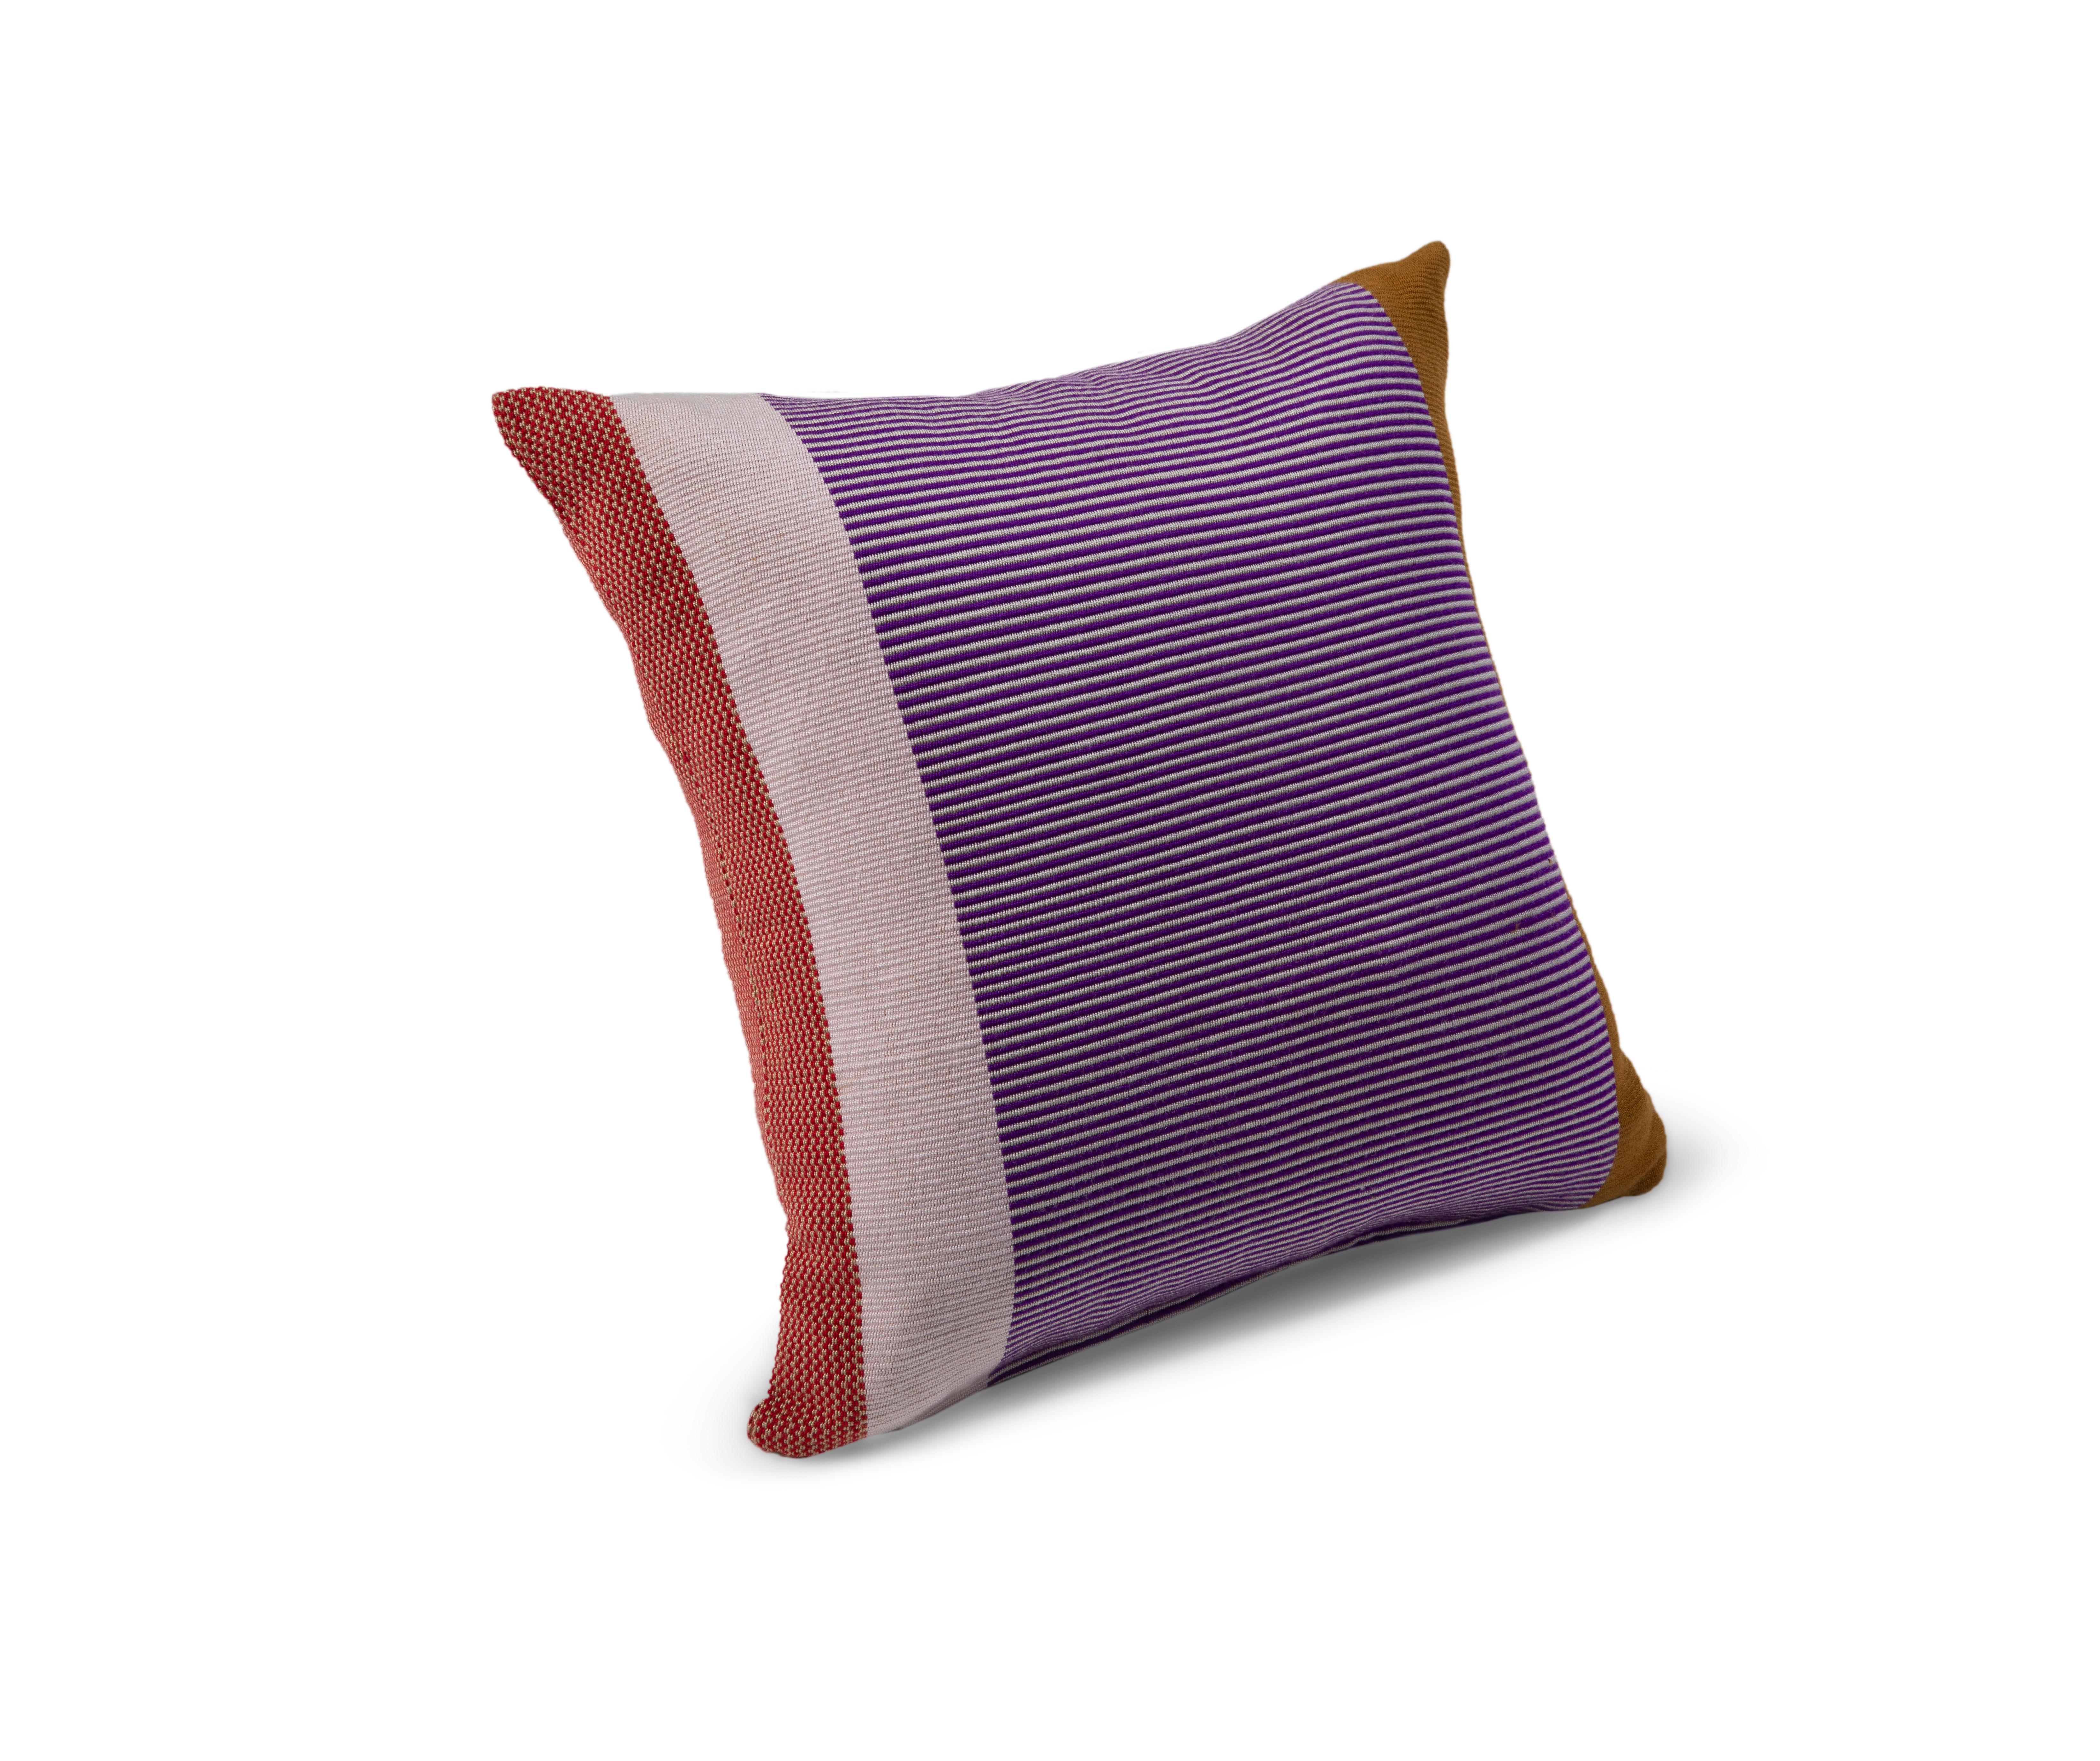 Maraca Pillow 3 by Sebastian Herkner
Materials: 100% Cotton. 
Technique: Hand-woven in Colombia. 
Dimensions: W 80 x H 80 cm 
Available in colors: verde/ purpura/ rojo, naranja/ dorado/ rojo, dorado/ purpura/ rojo.

With their strong color-blocking,